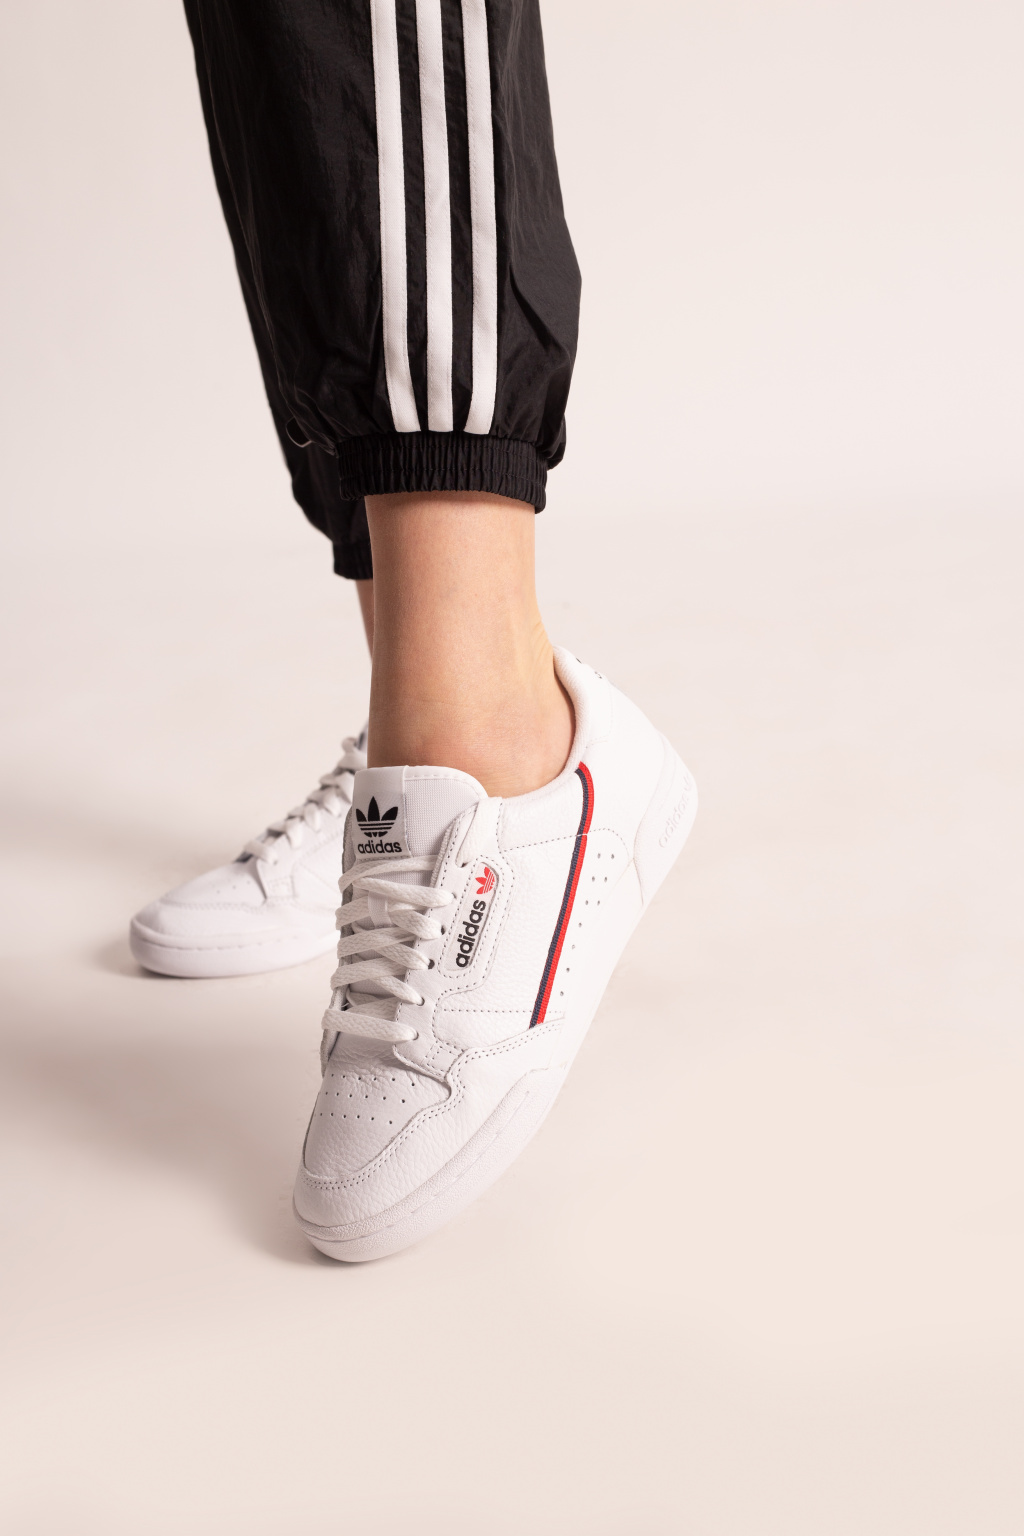 adidas sample Originals ‘Continental 80’ sneakers